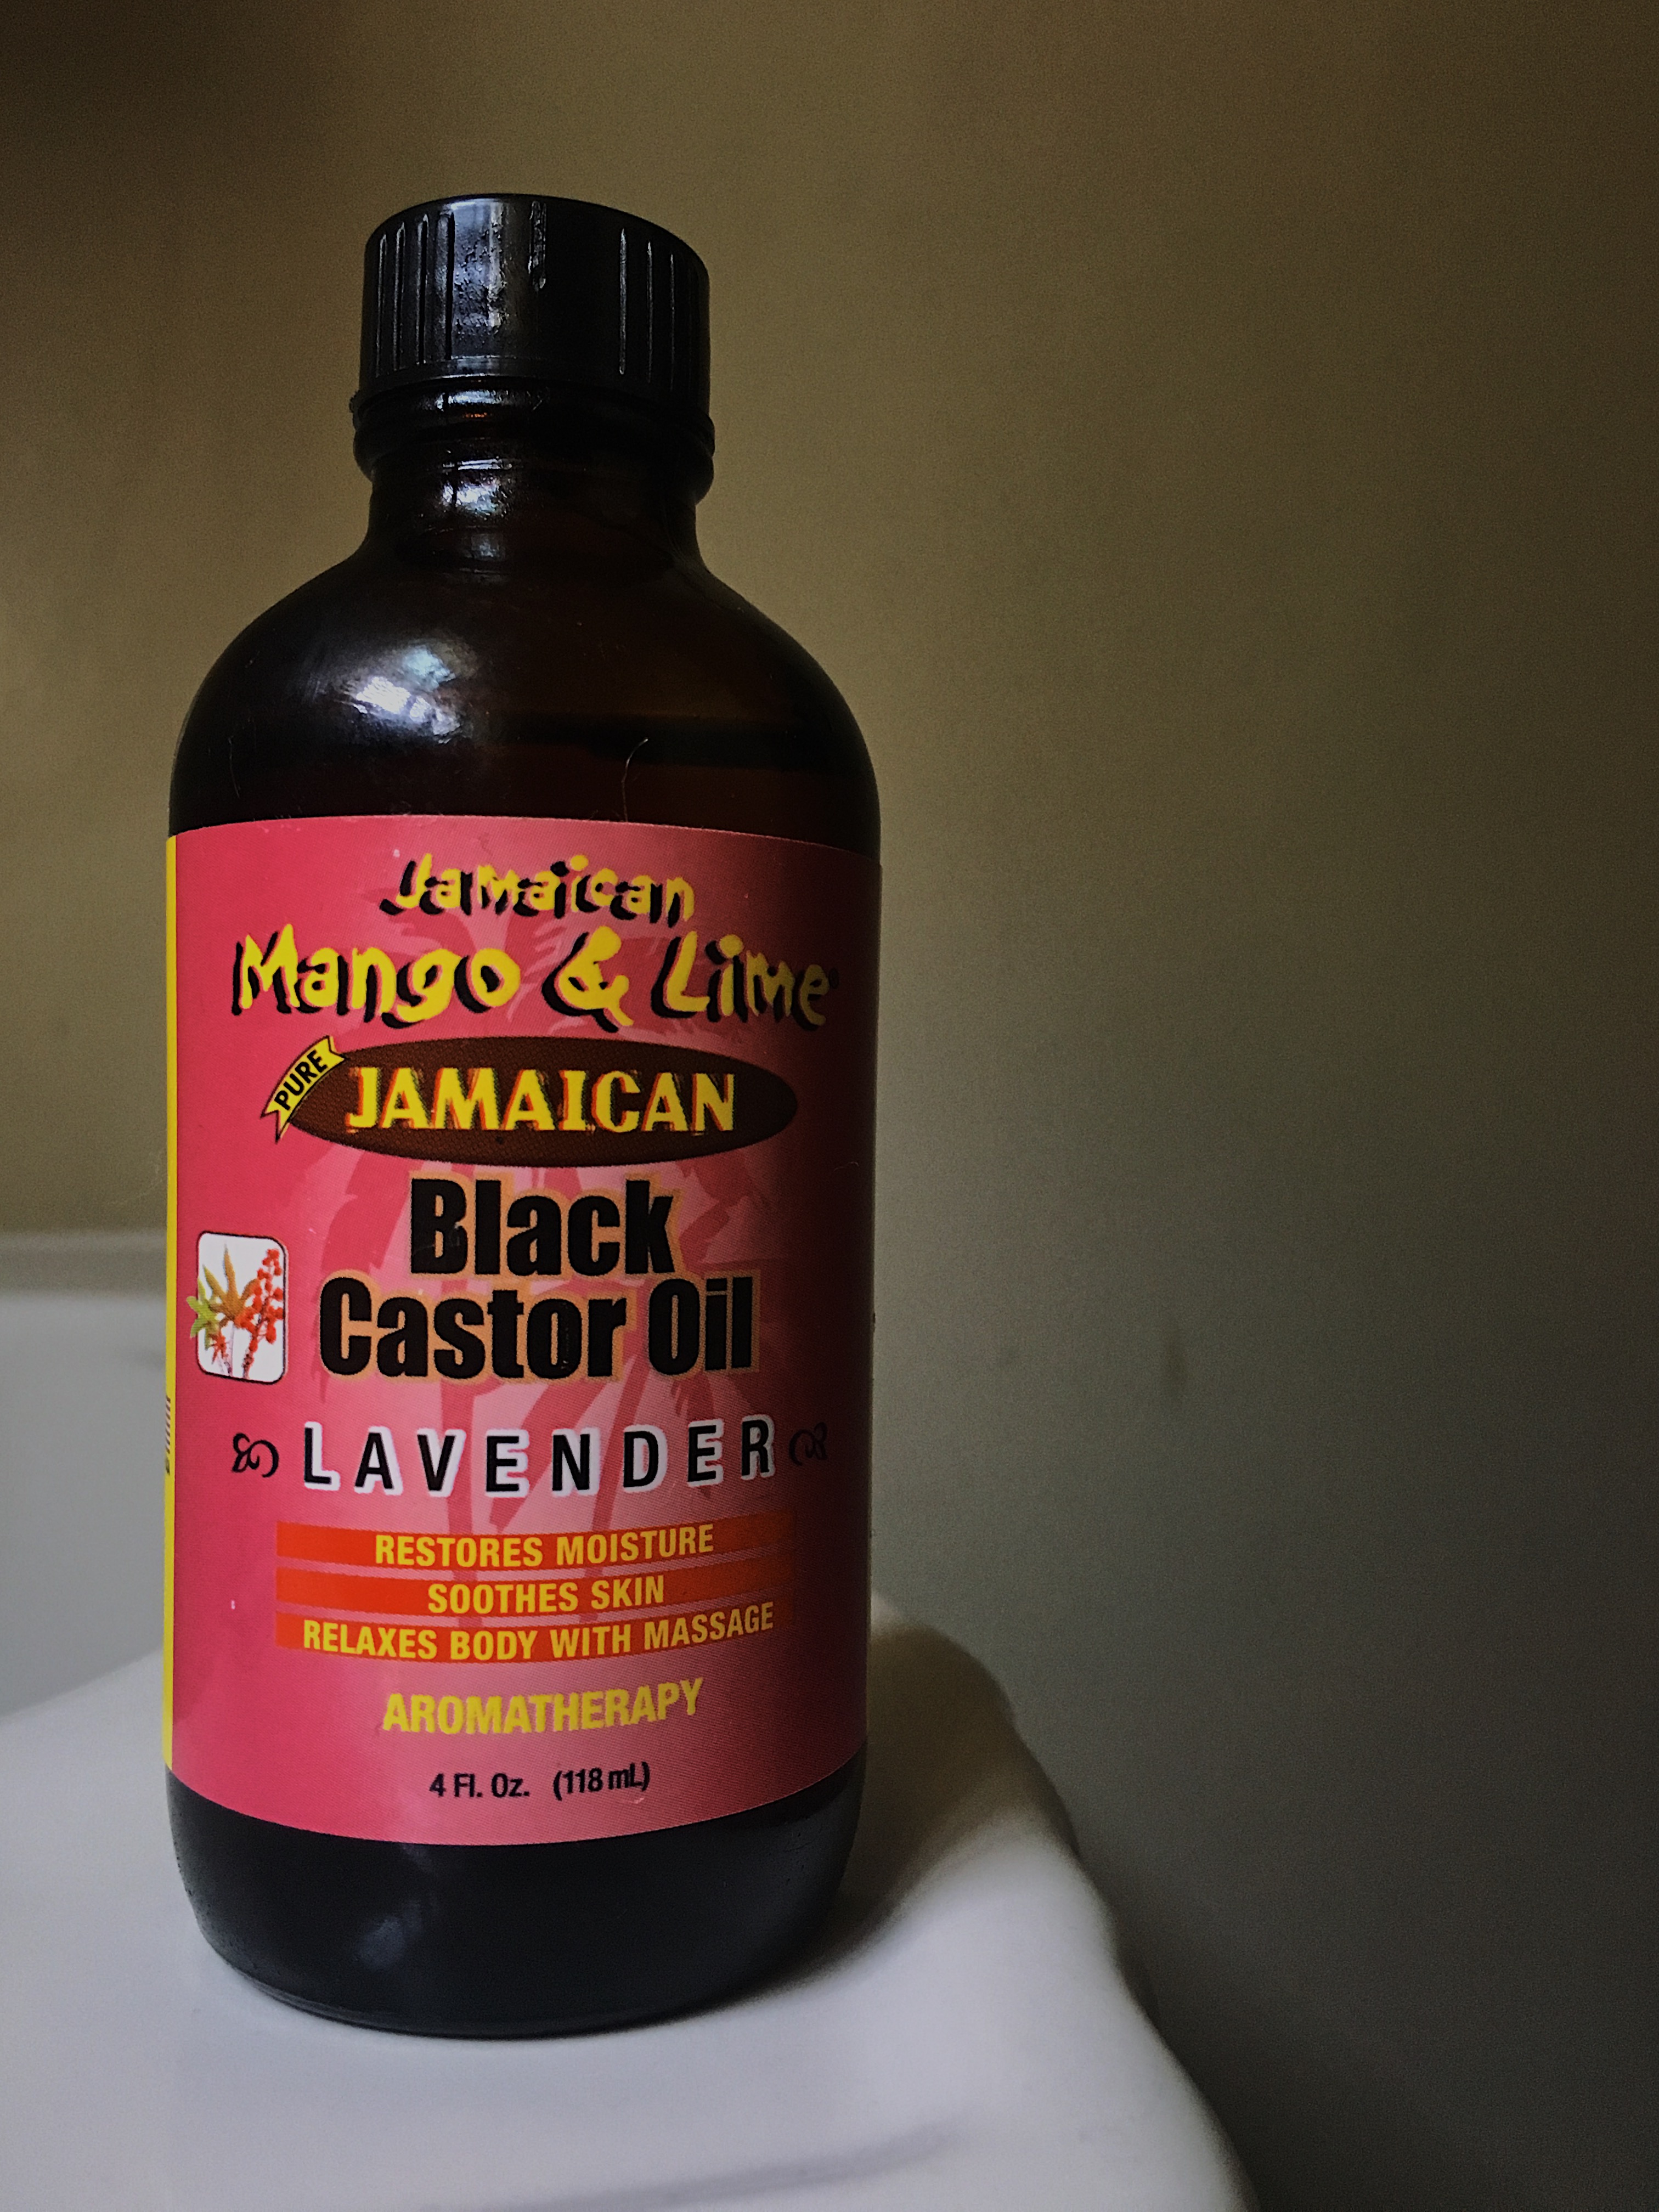 jamaican mango &lime black castor oil